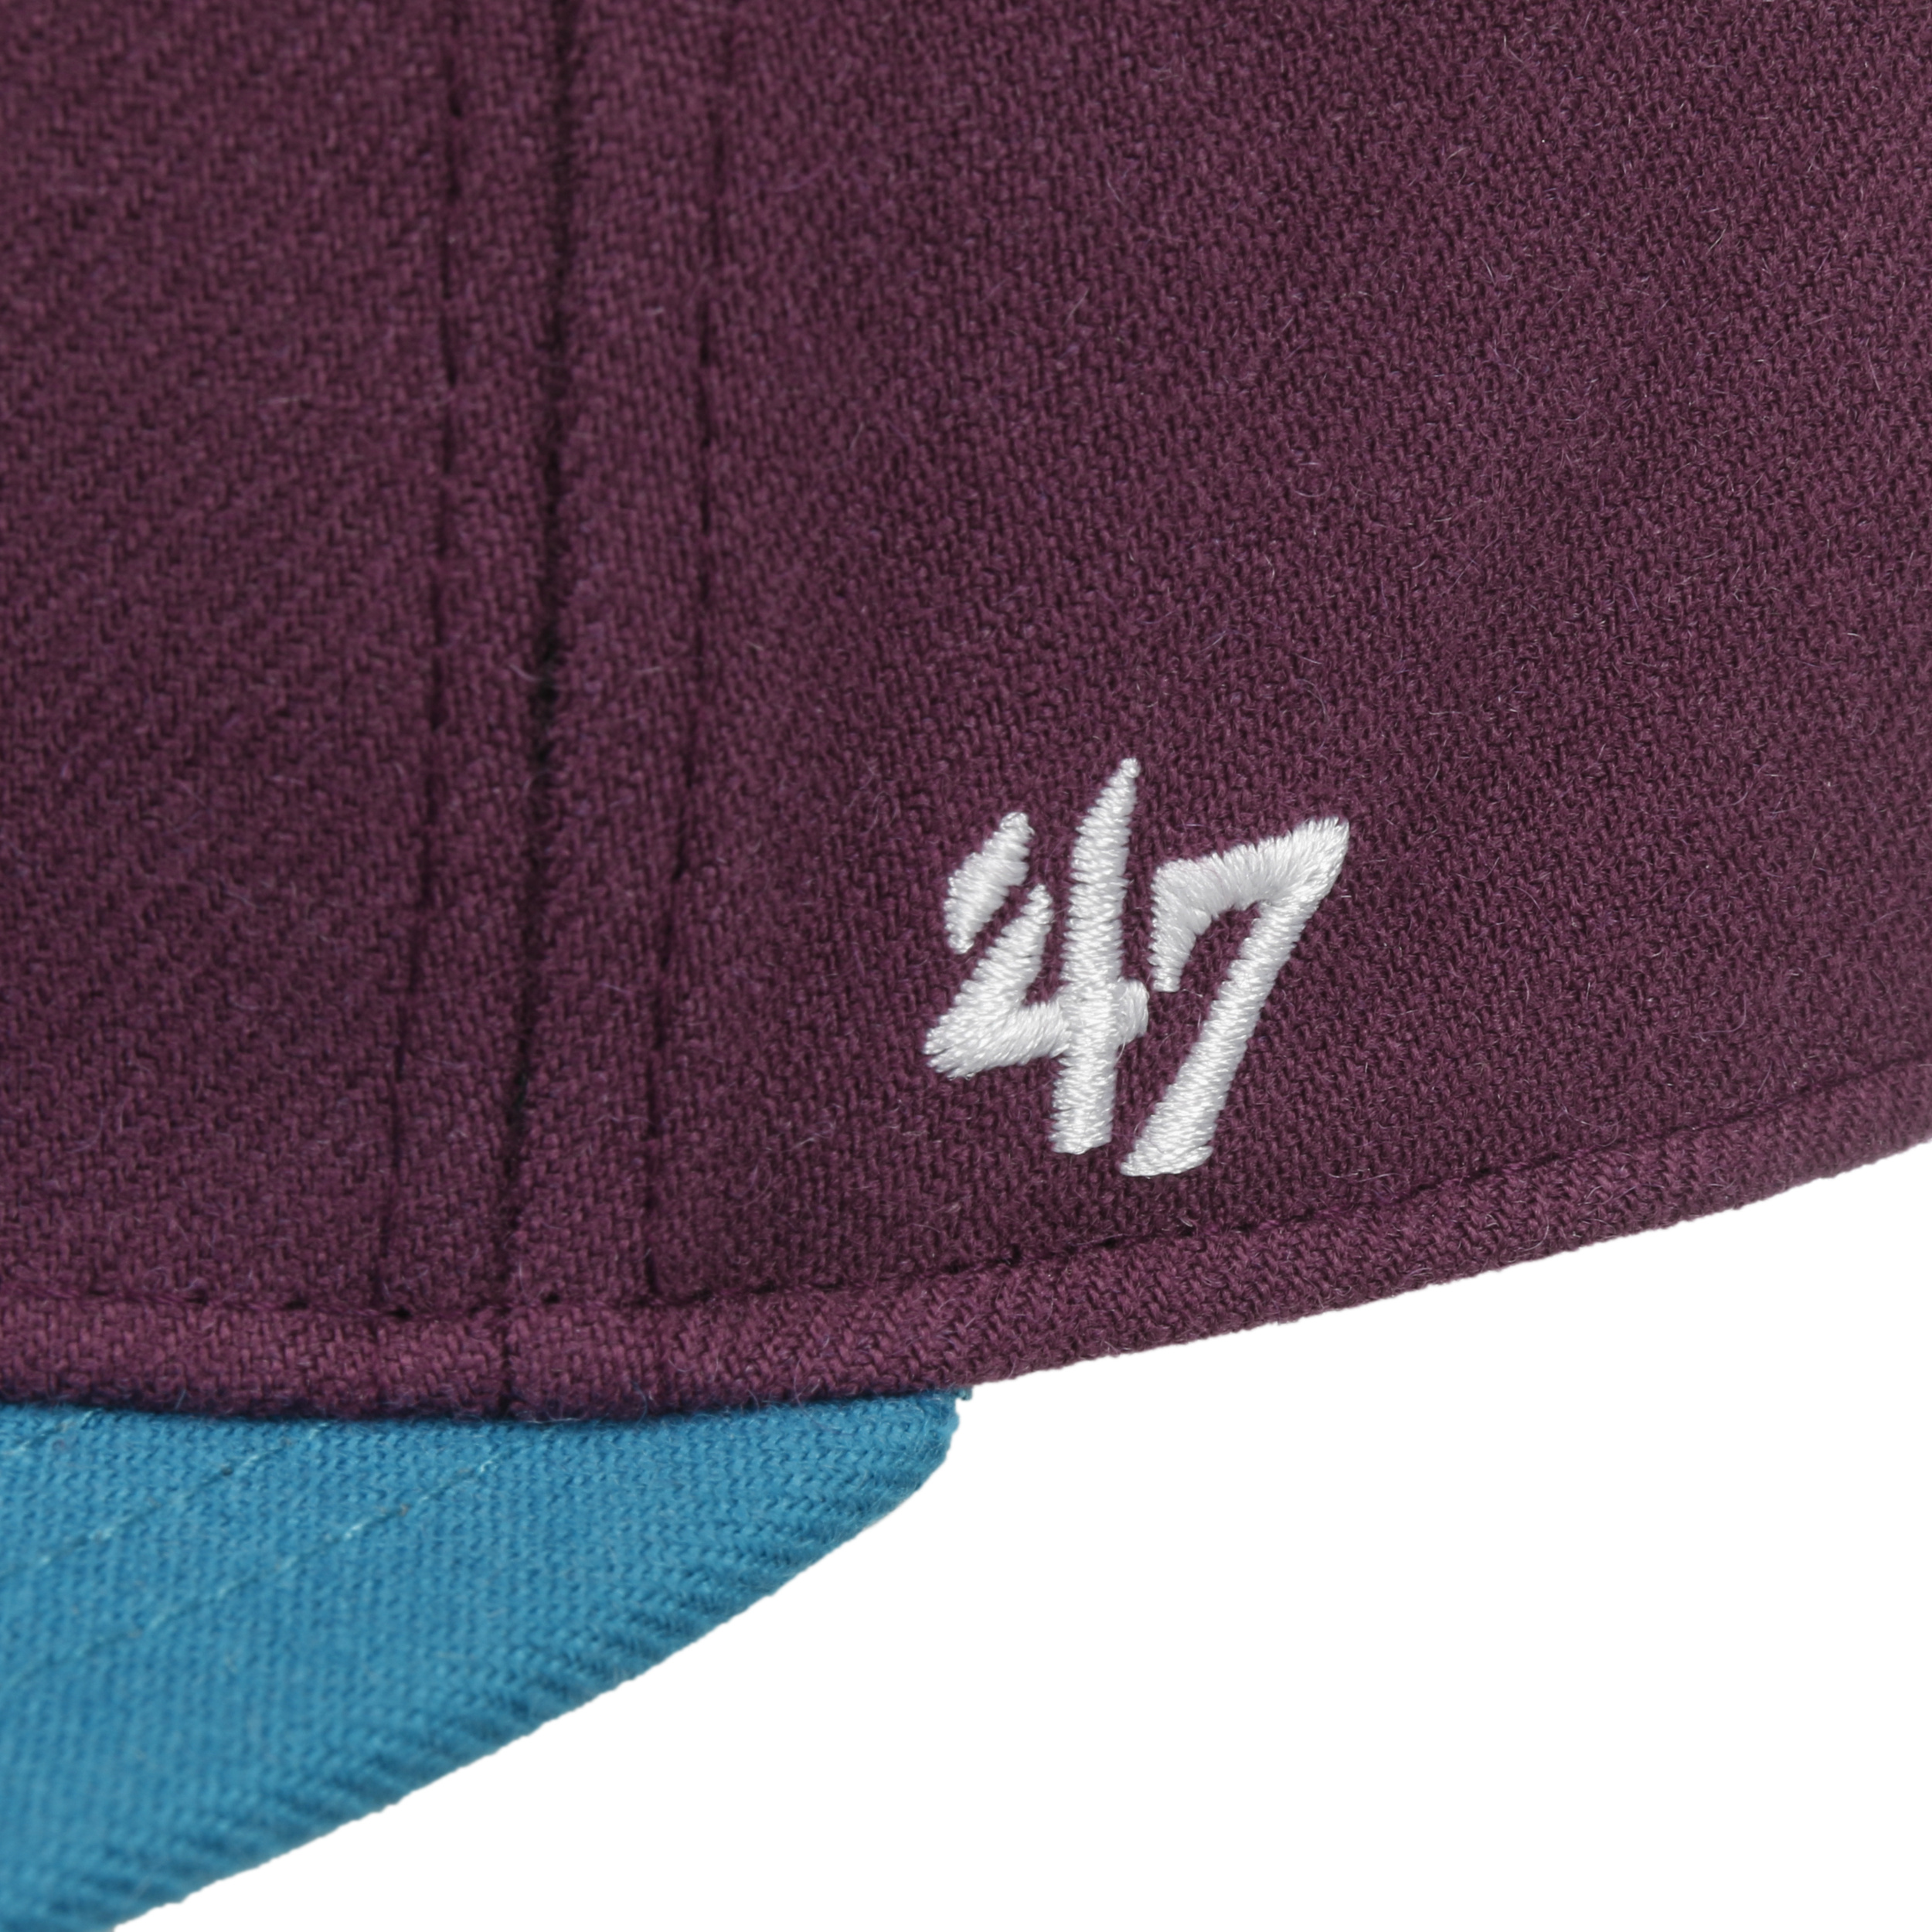 47 Brand Snapback No Shot Cap - NHL Anaheim Ducks Purple